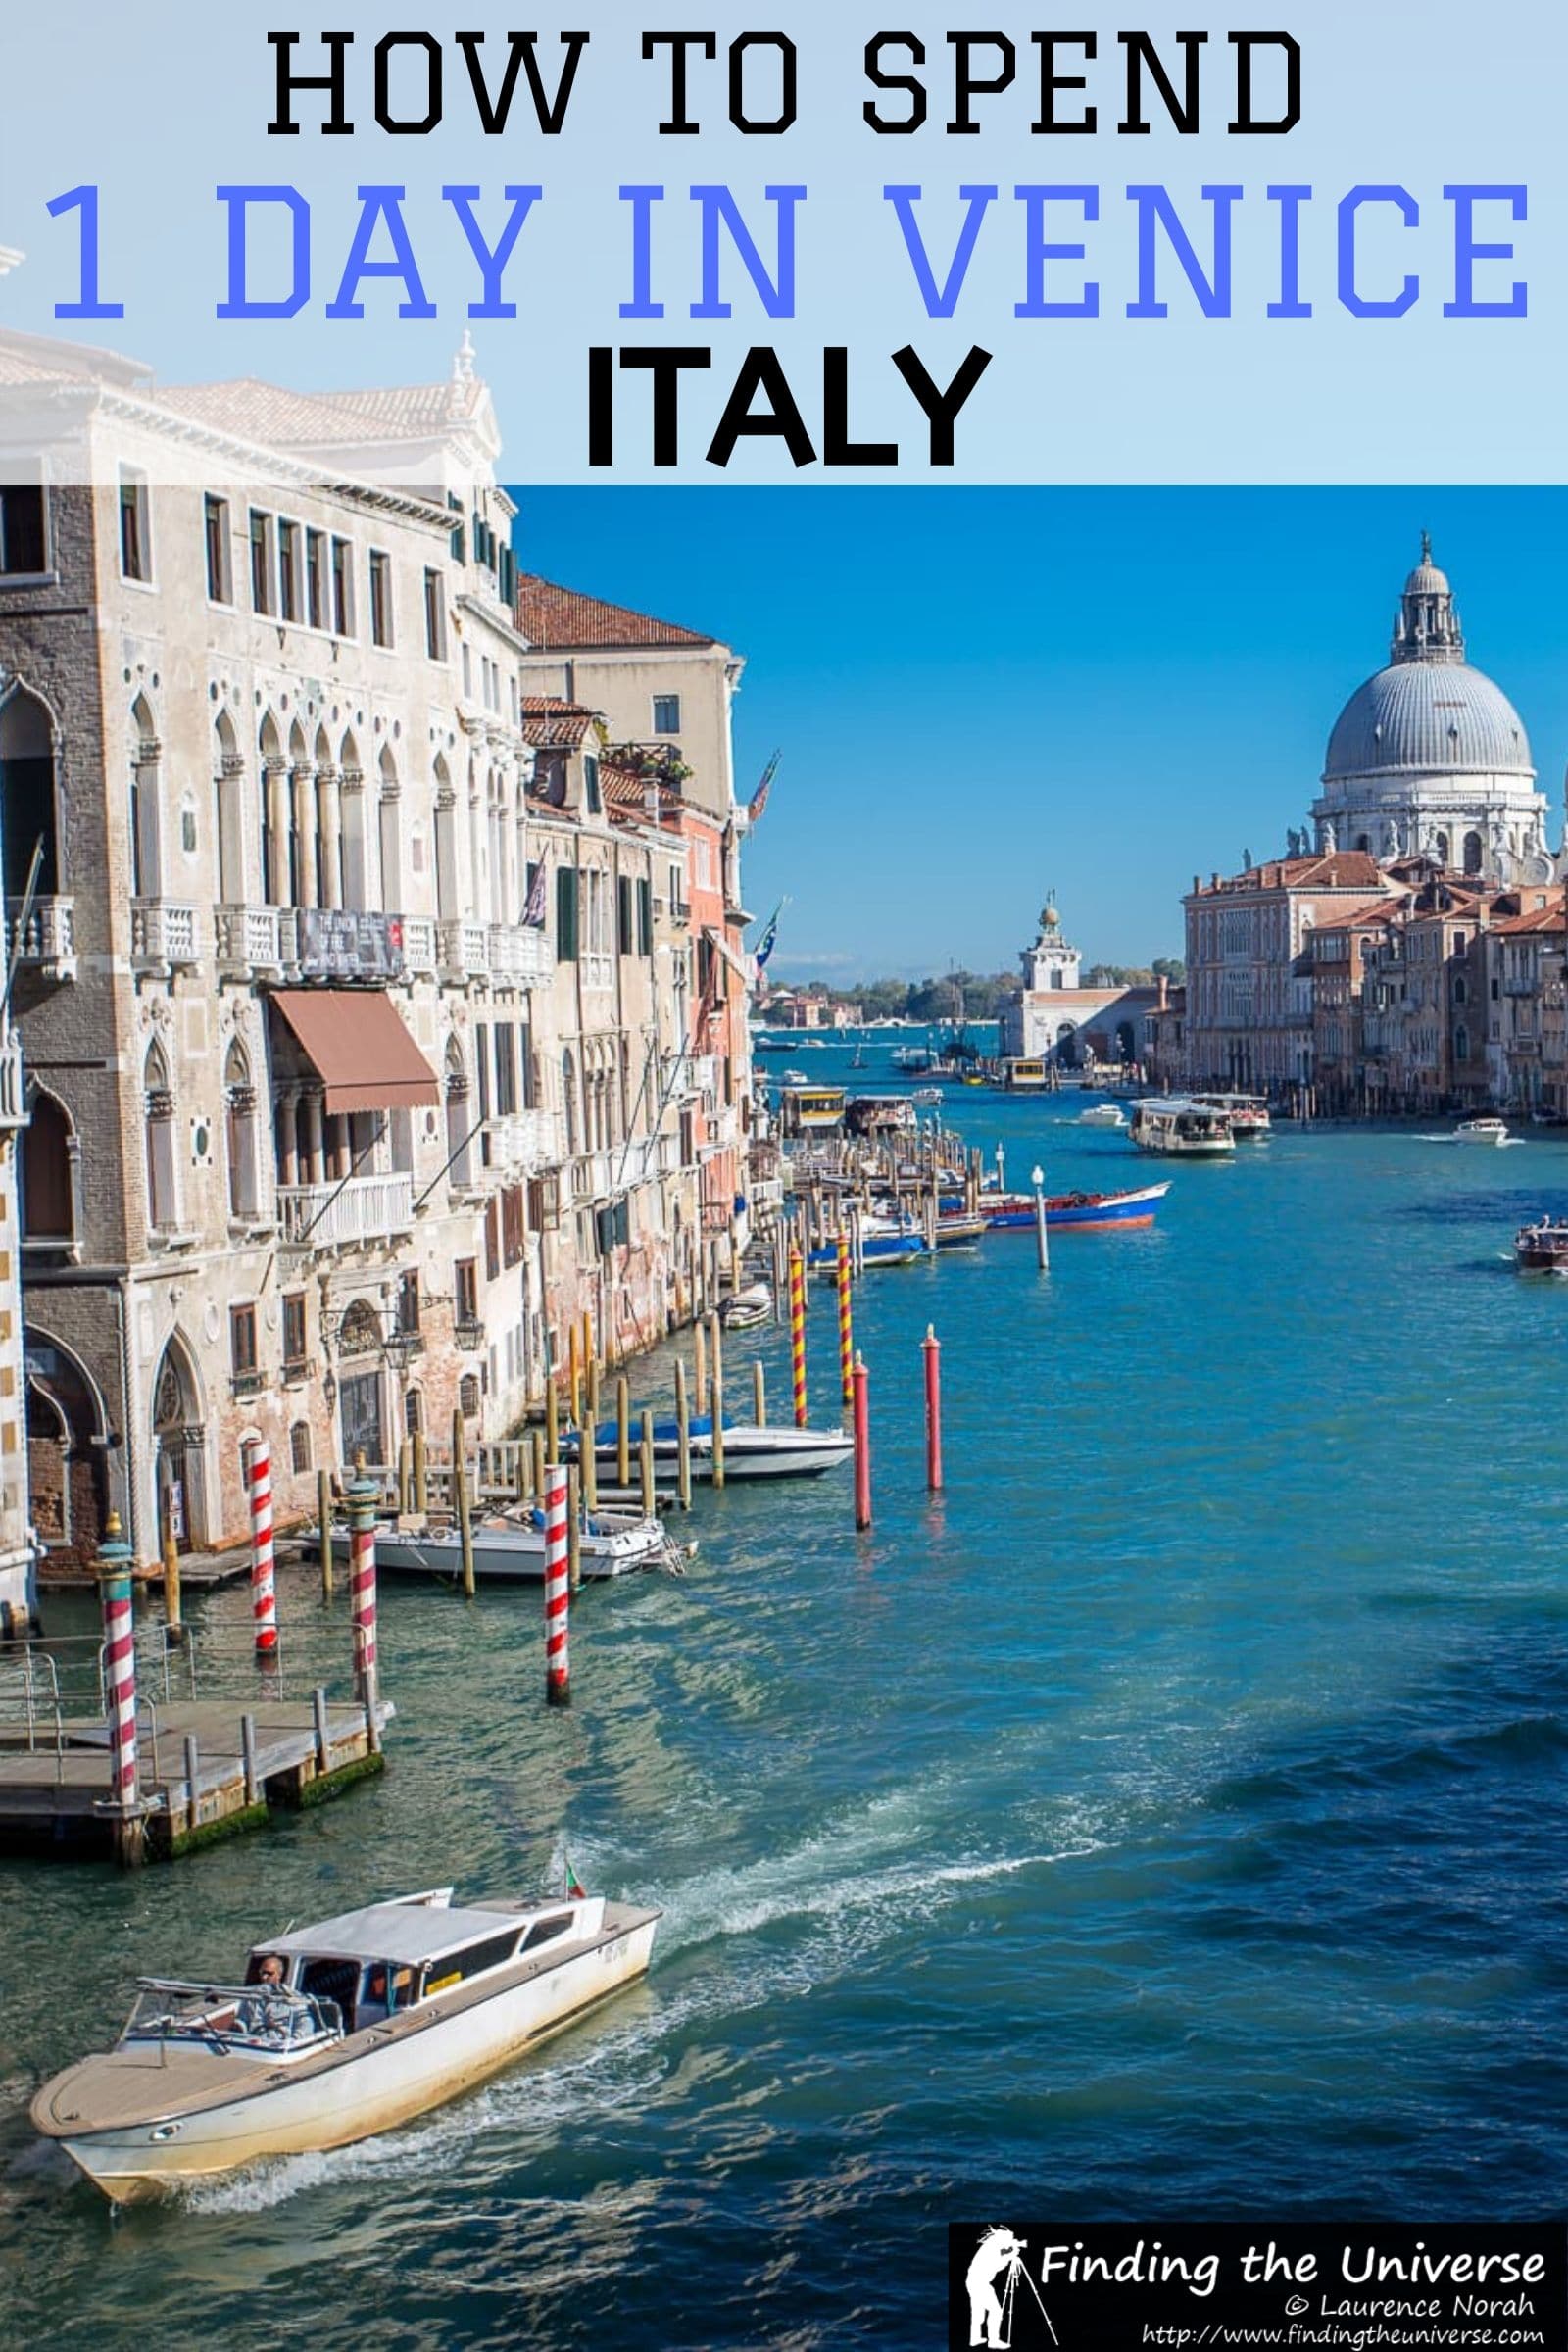 Travel Book Venice - Men - Travel